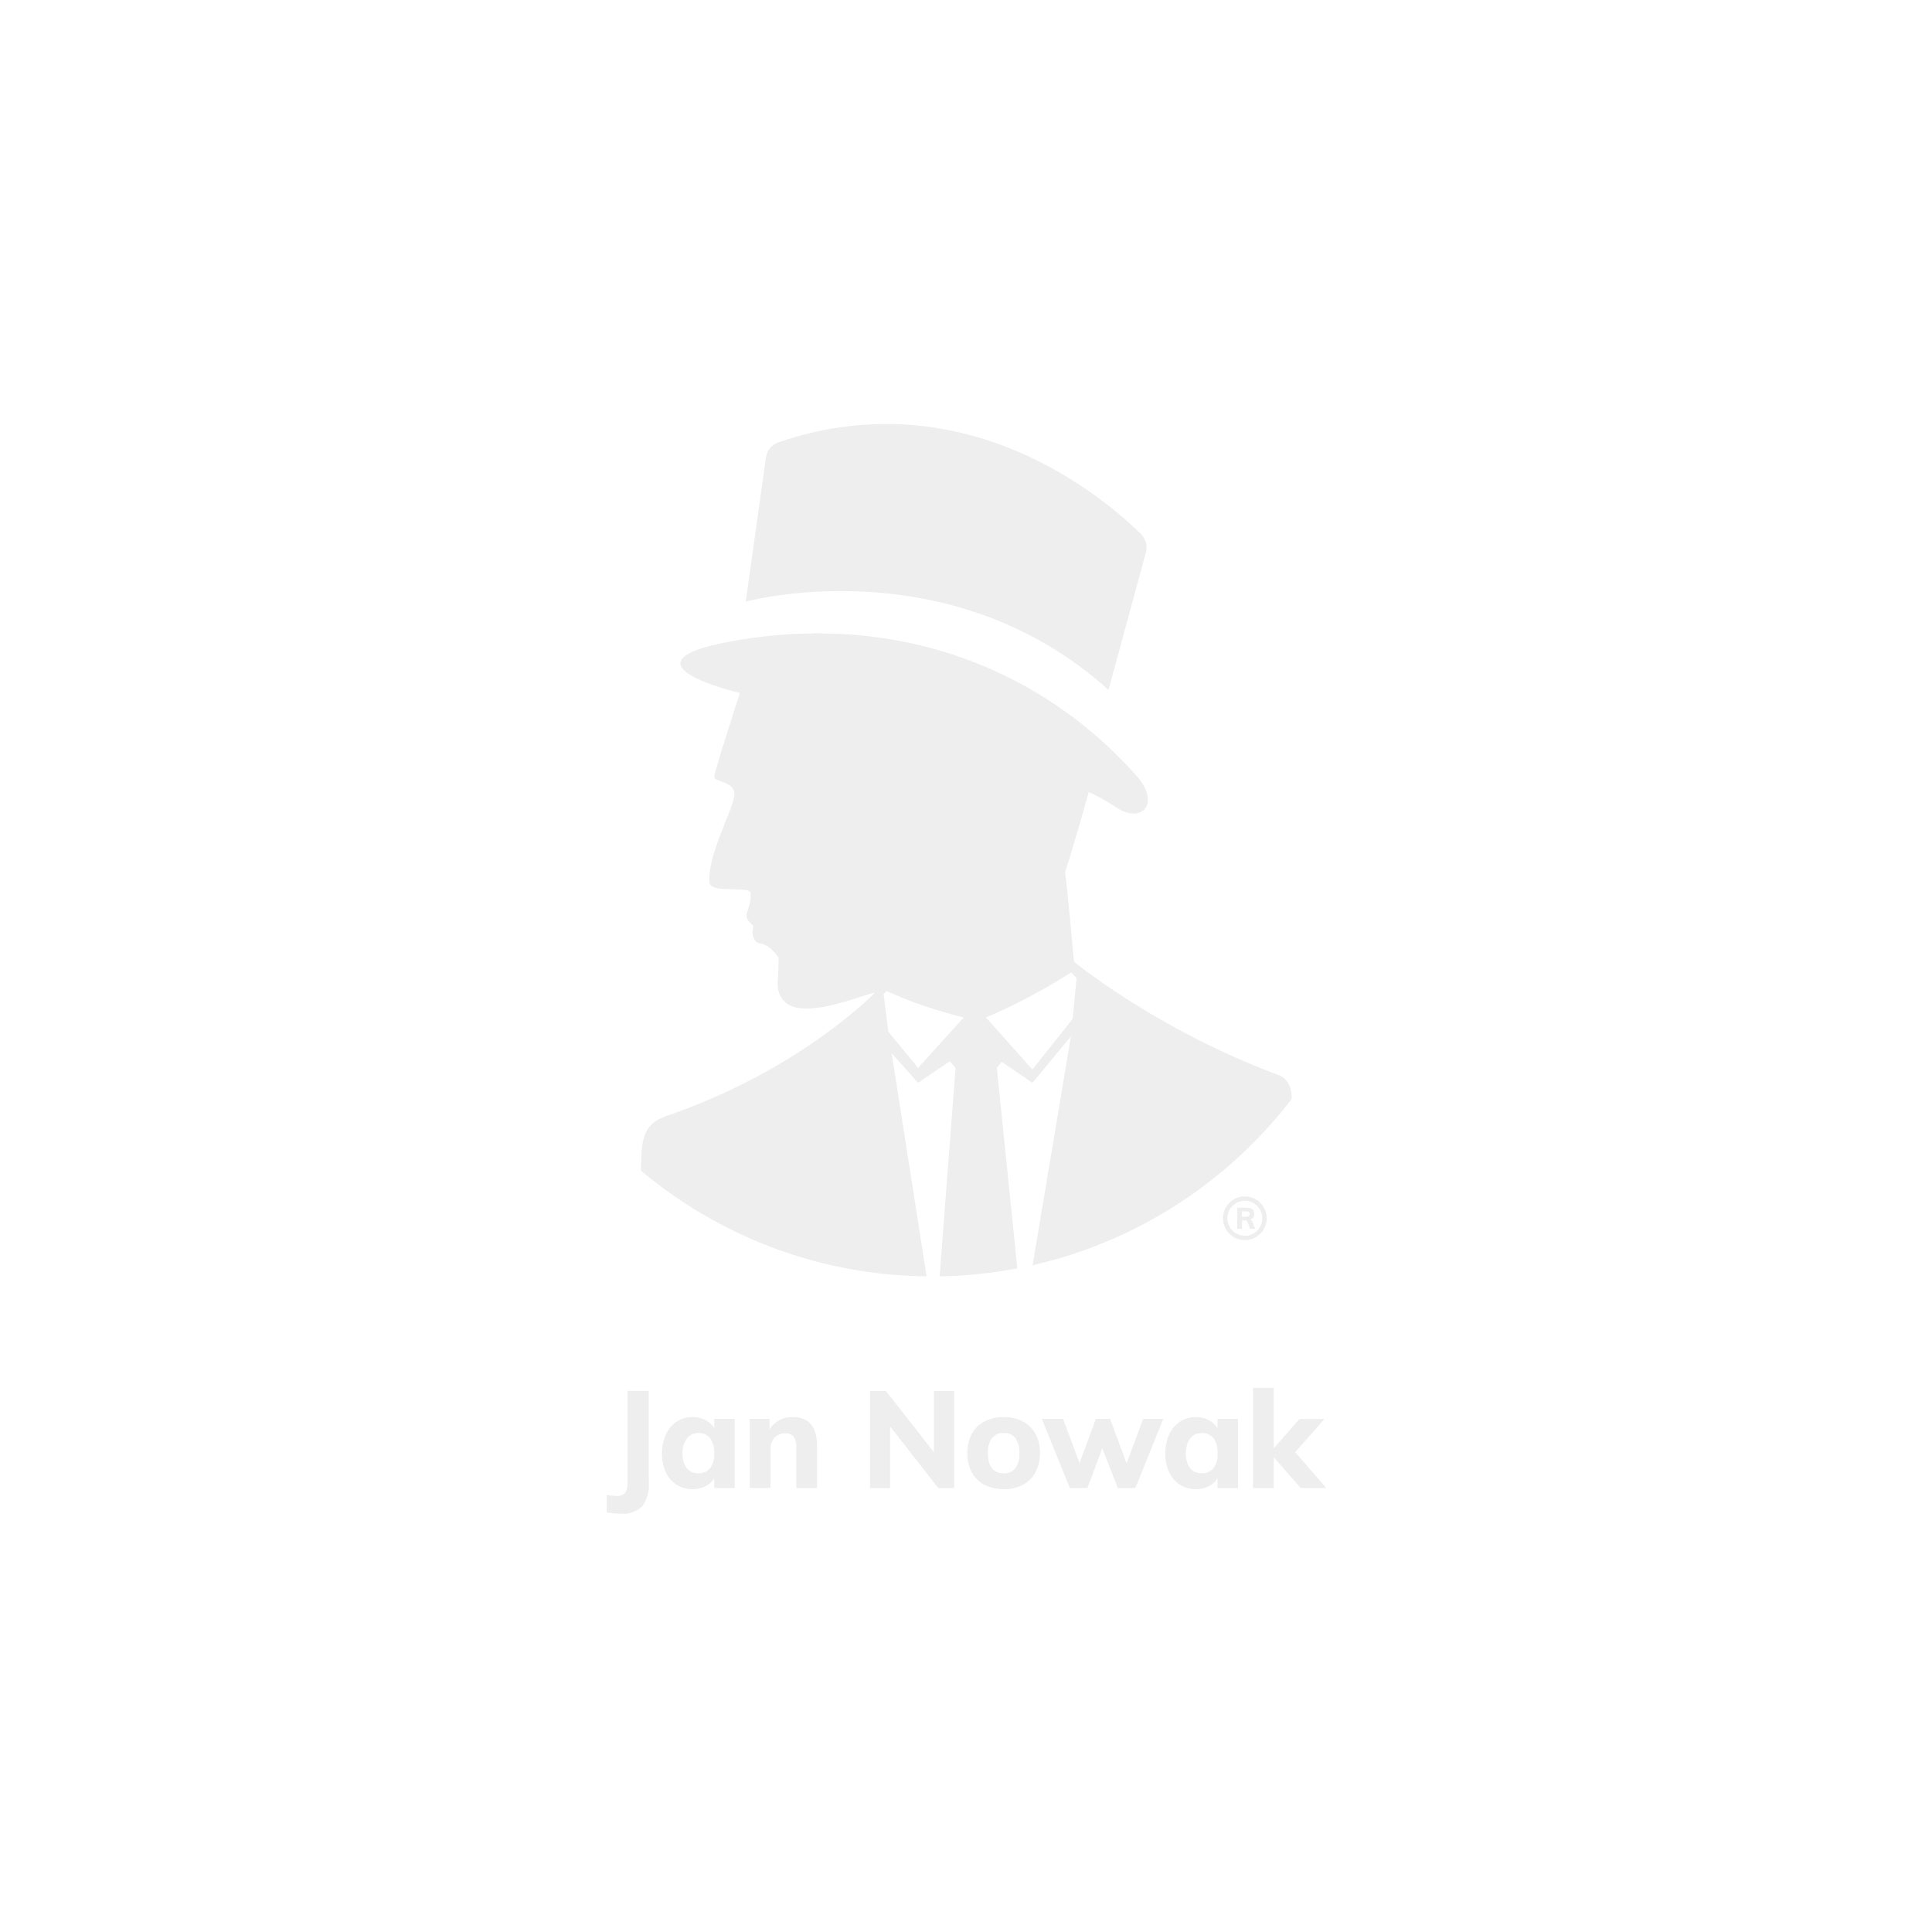 JAN NOWAK model SARA V005 460x1630x620 metalowa szafa kartotekowa szara